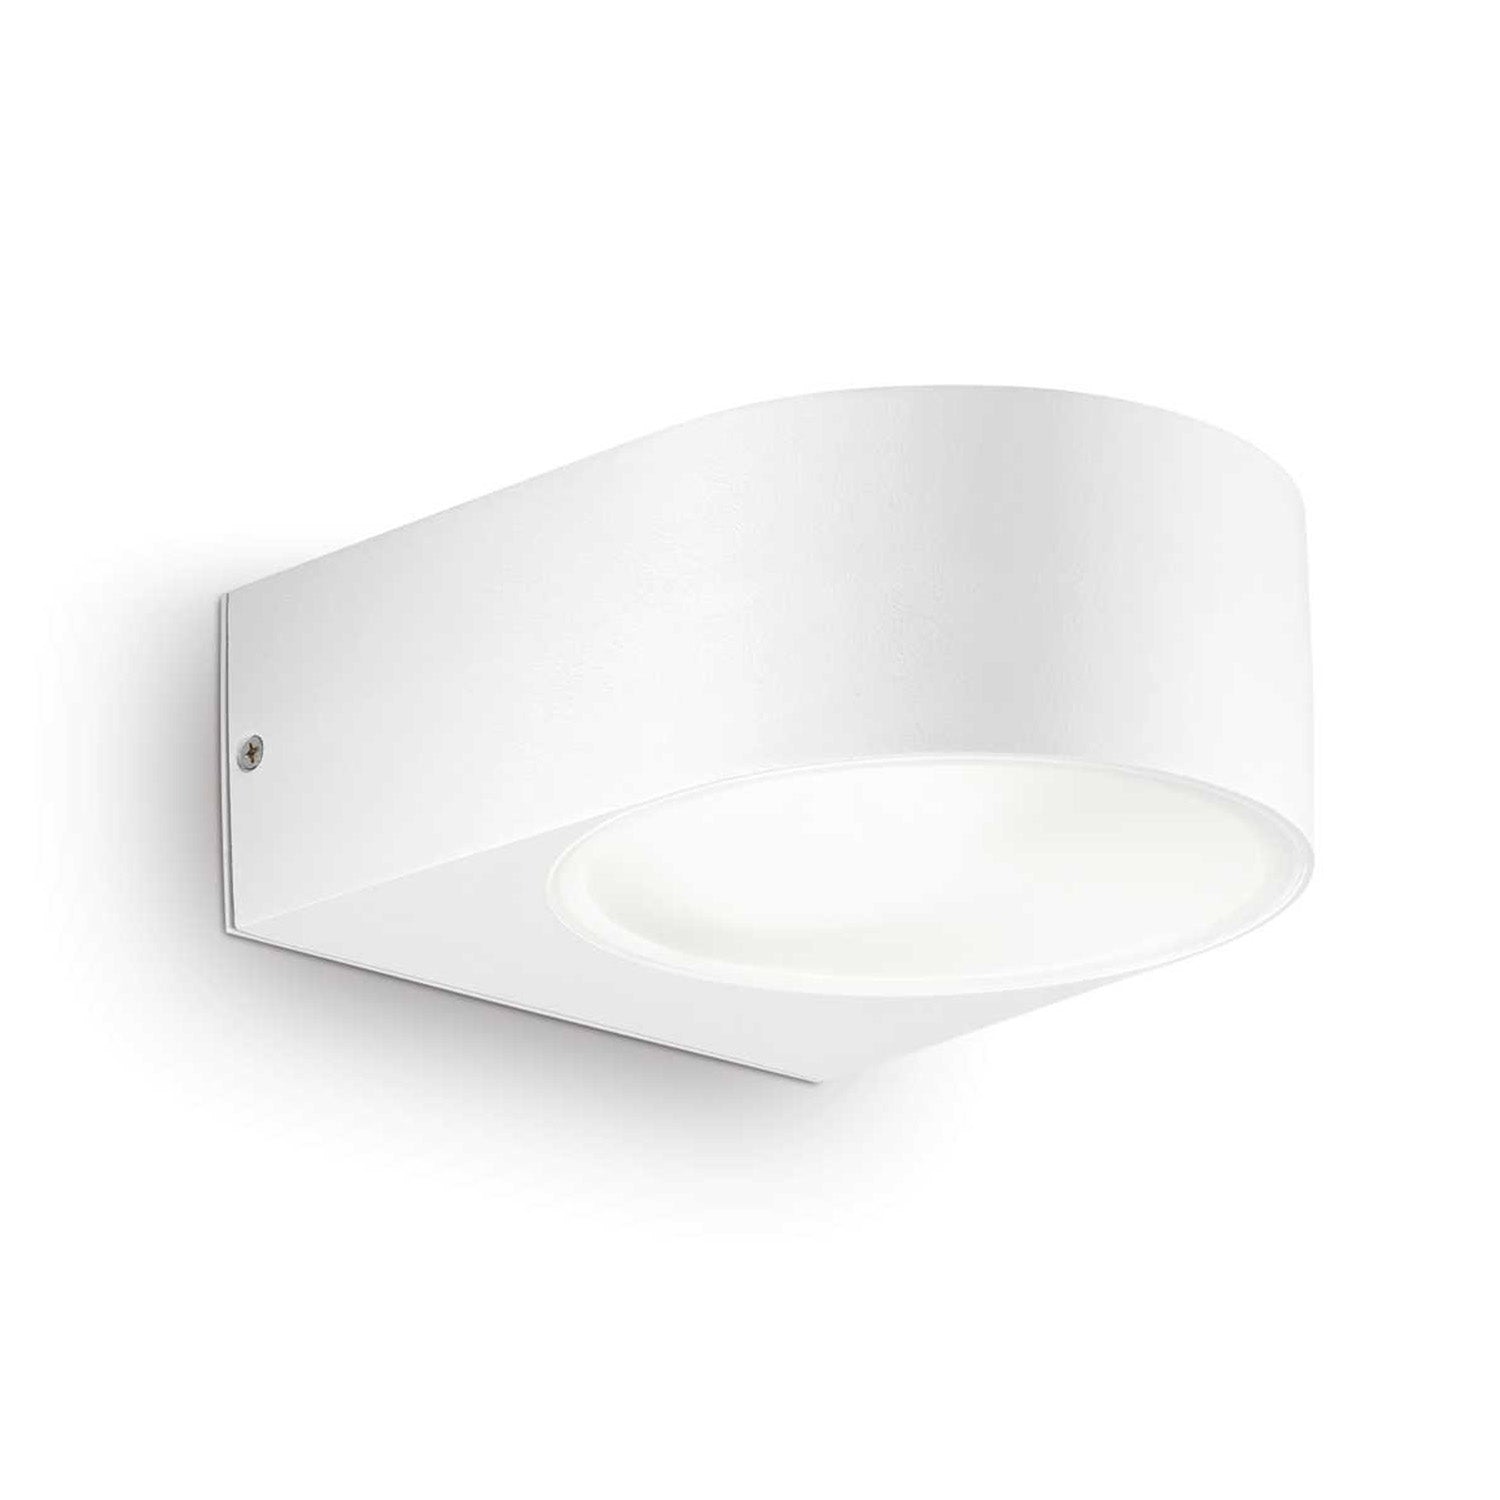 IKO - Minimalist aluminum wall light for outdoors